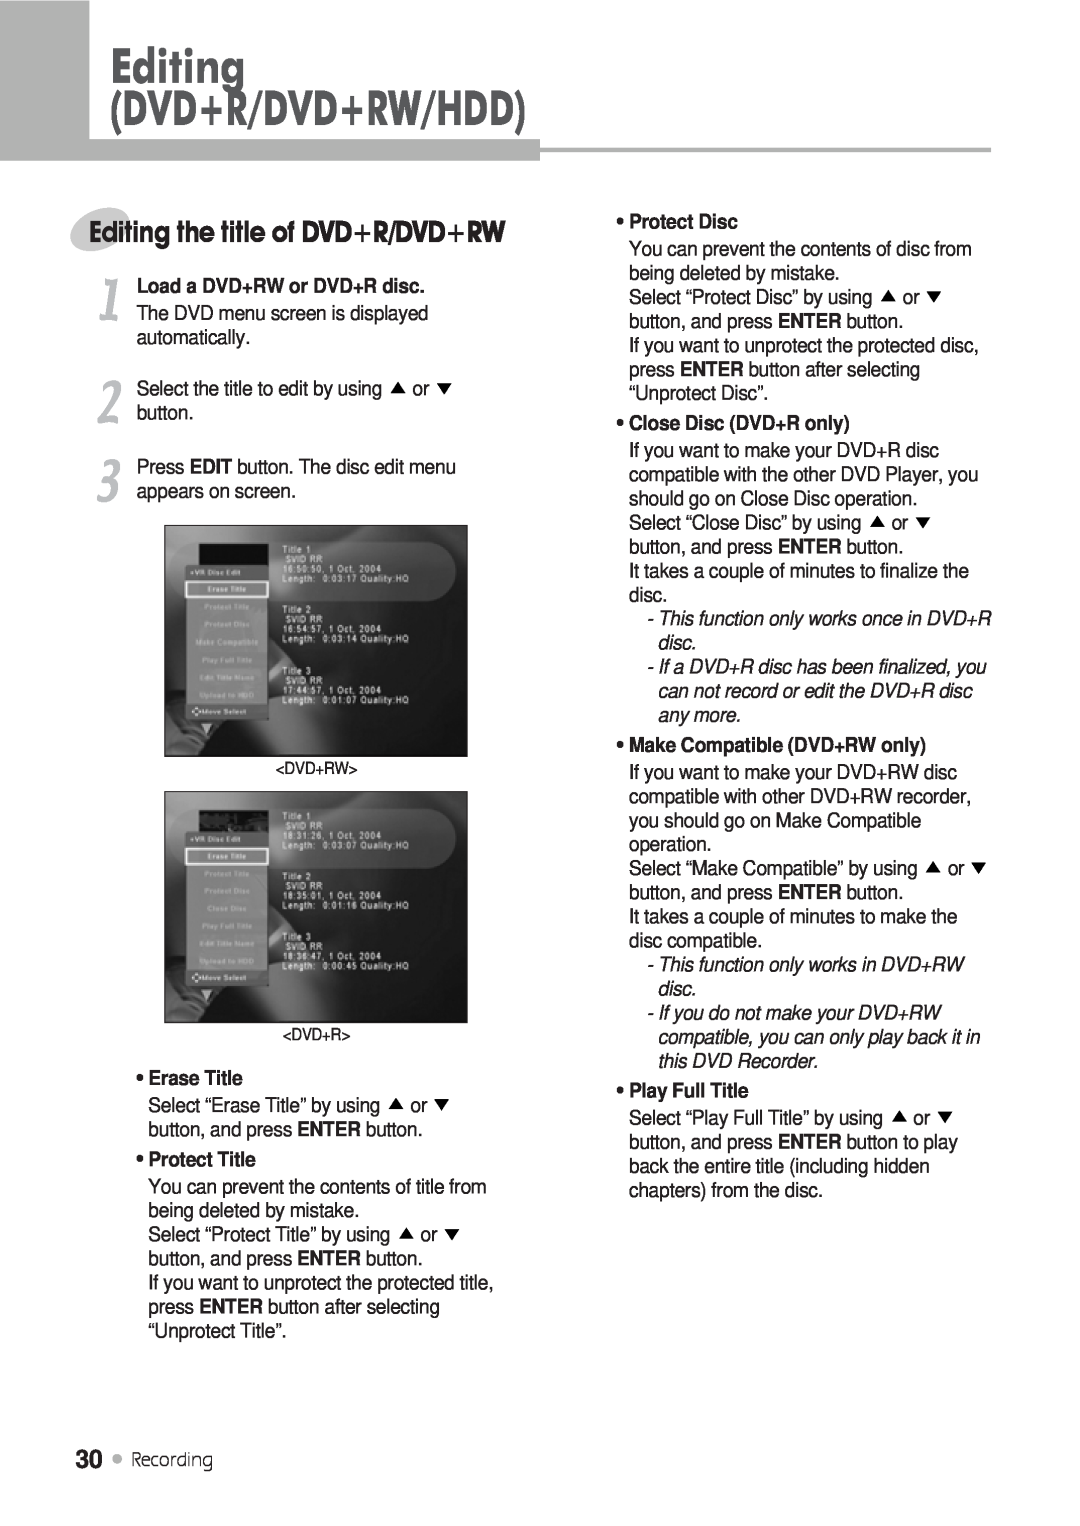 Kodak DRHD-120 manual Editing DVD+R/DVD+RW/HDD, Editing the title of DVD+R/DVD+RW, Erase Title, Protect Title, Protect Disc 